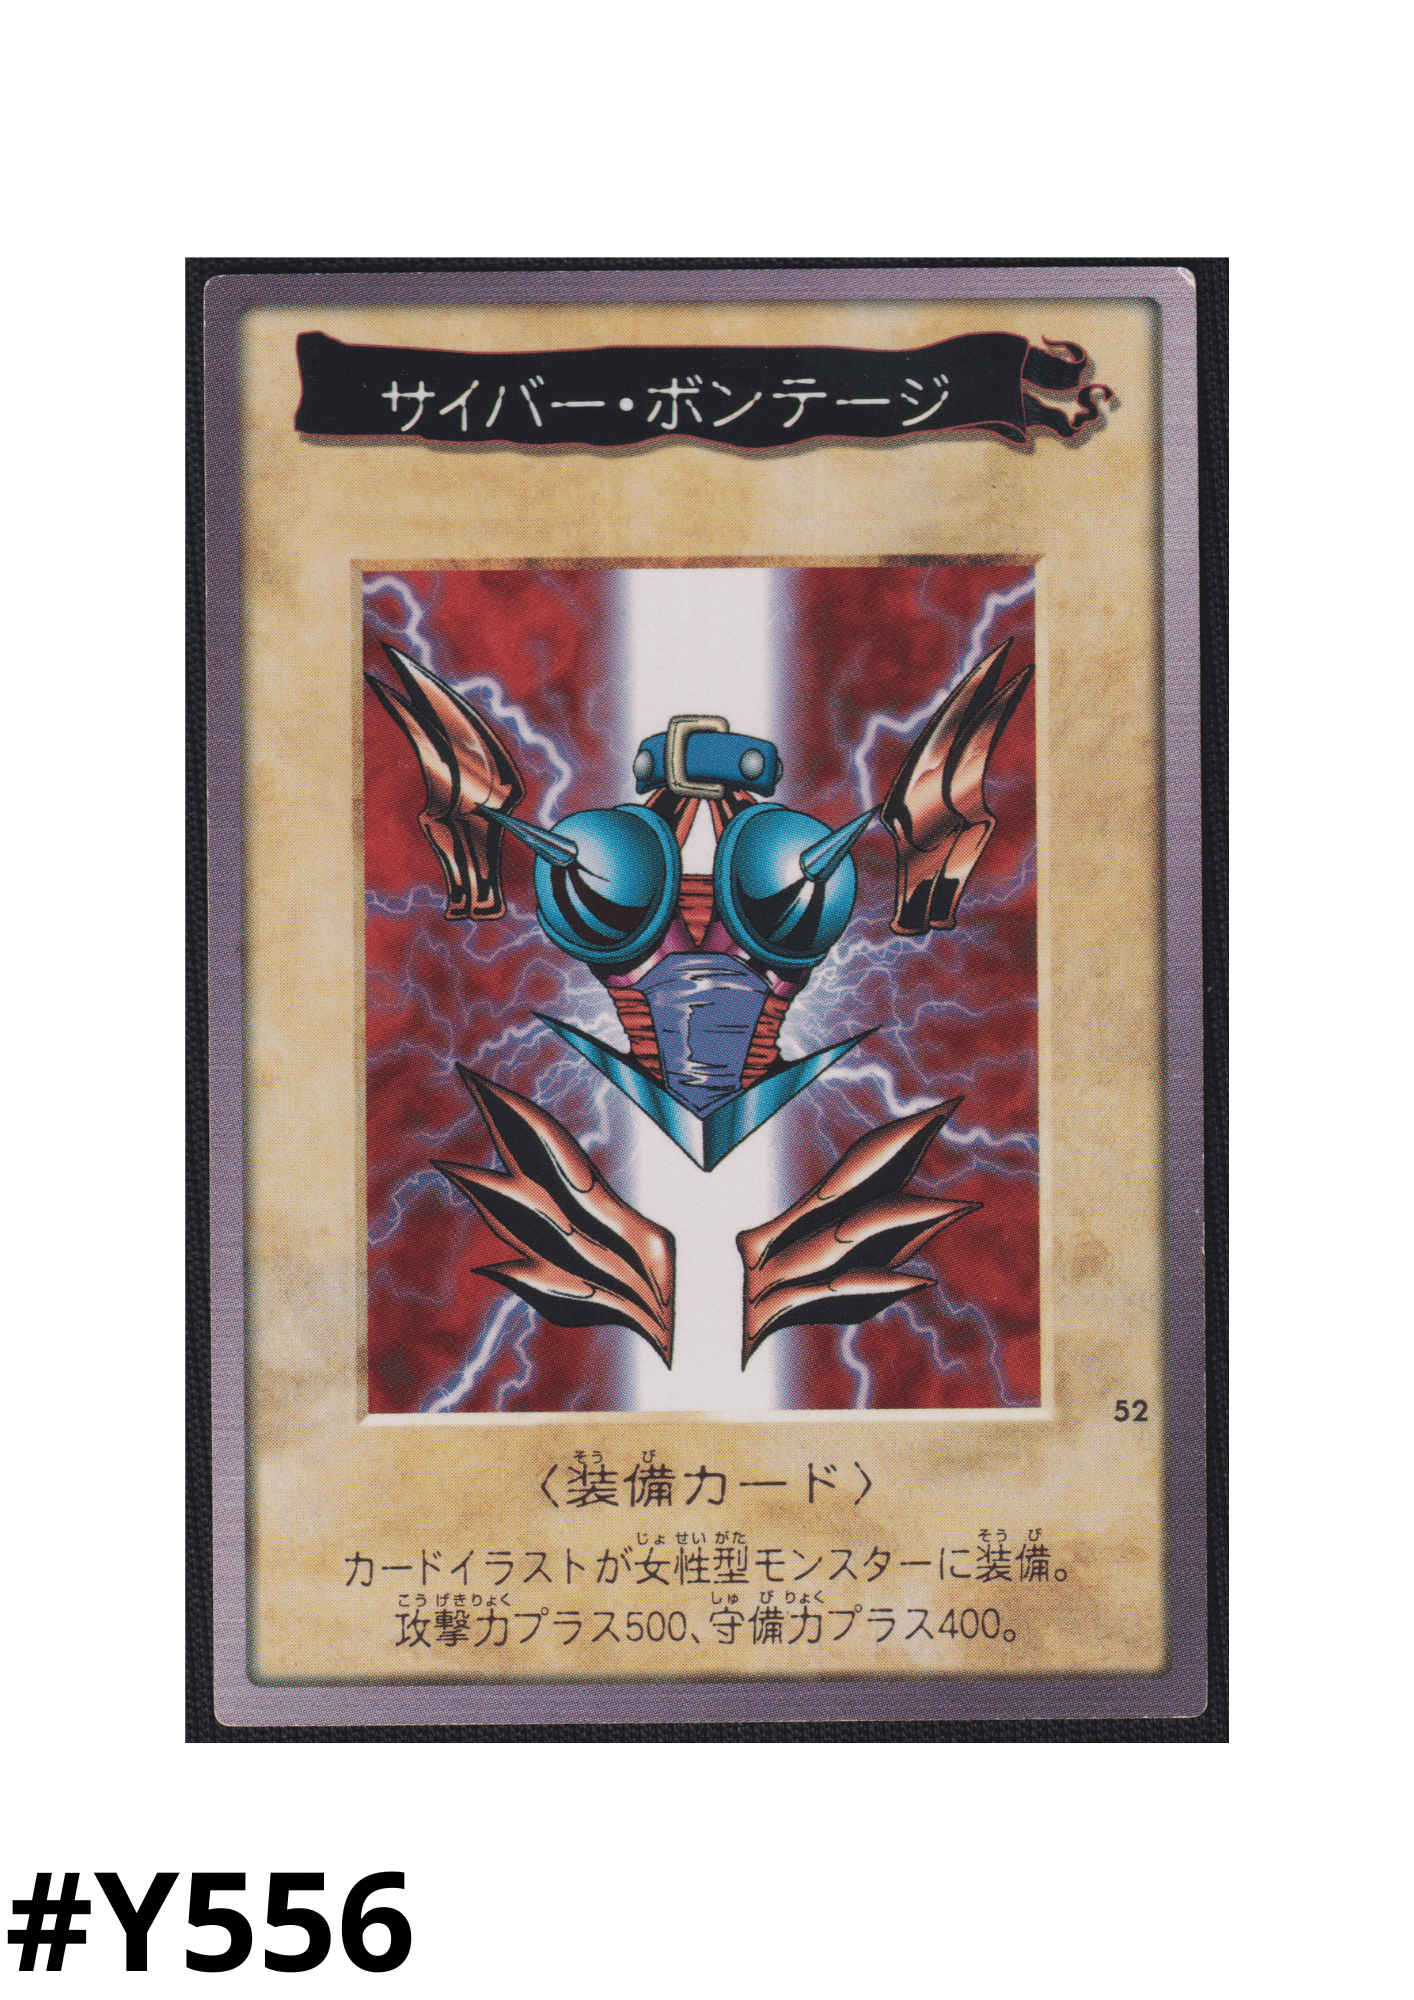 Yu-Gi-Oh! | Bandai Card No.52 | Cyber Shield ChitoroShop